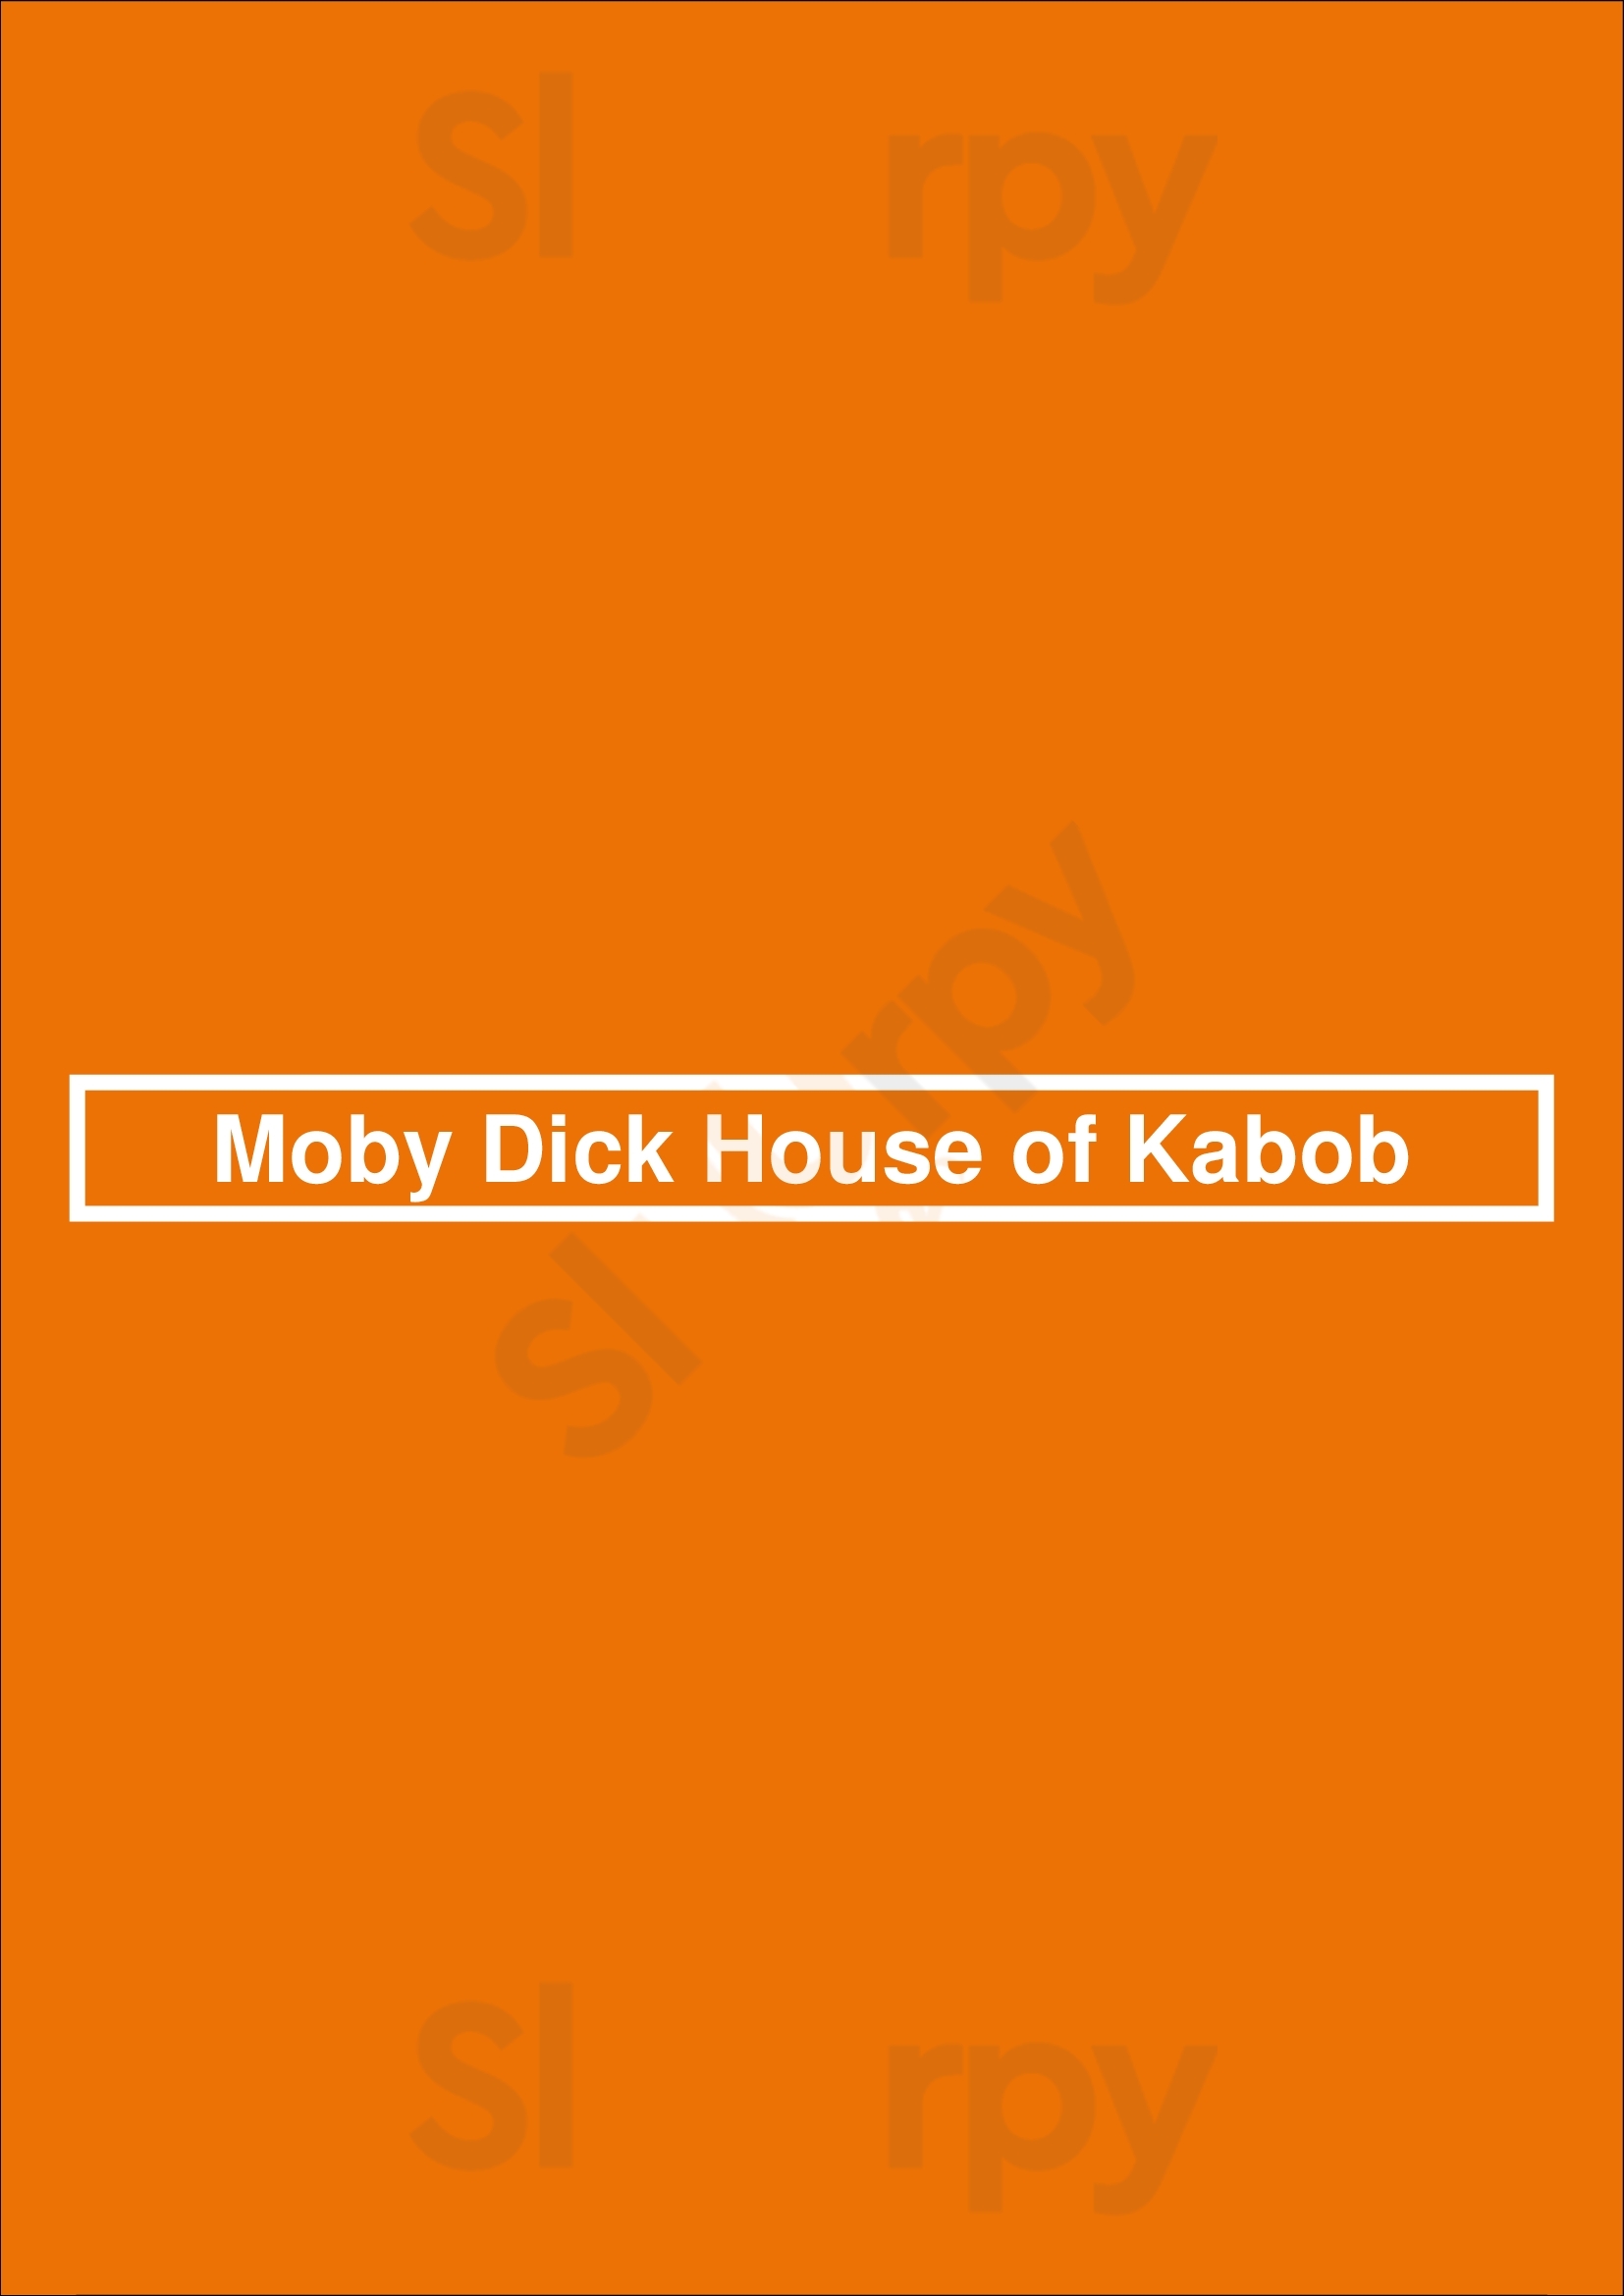 Moby Dick House Of Kabob Washington DC Menu - 1